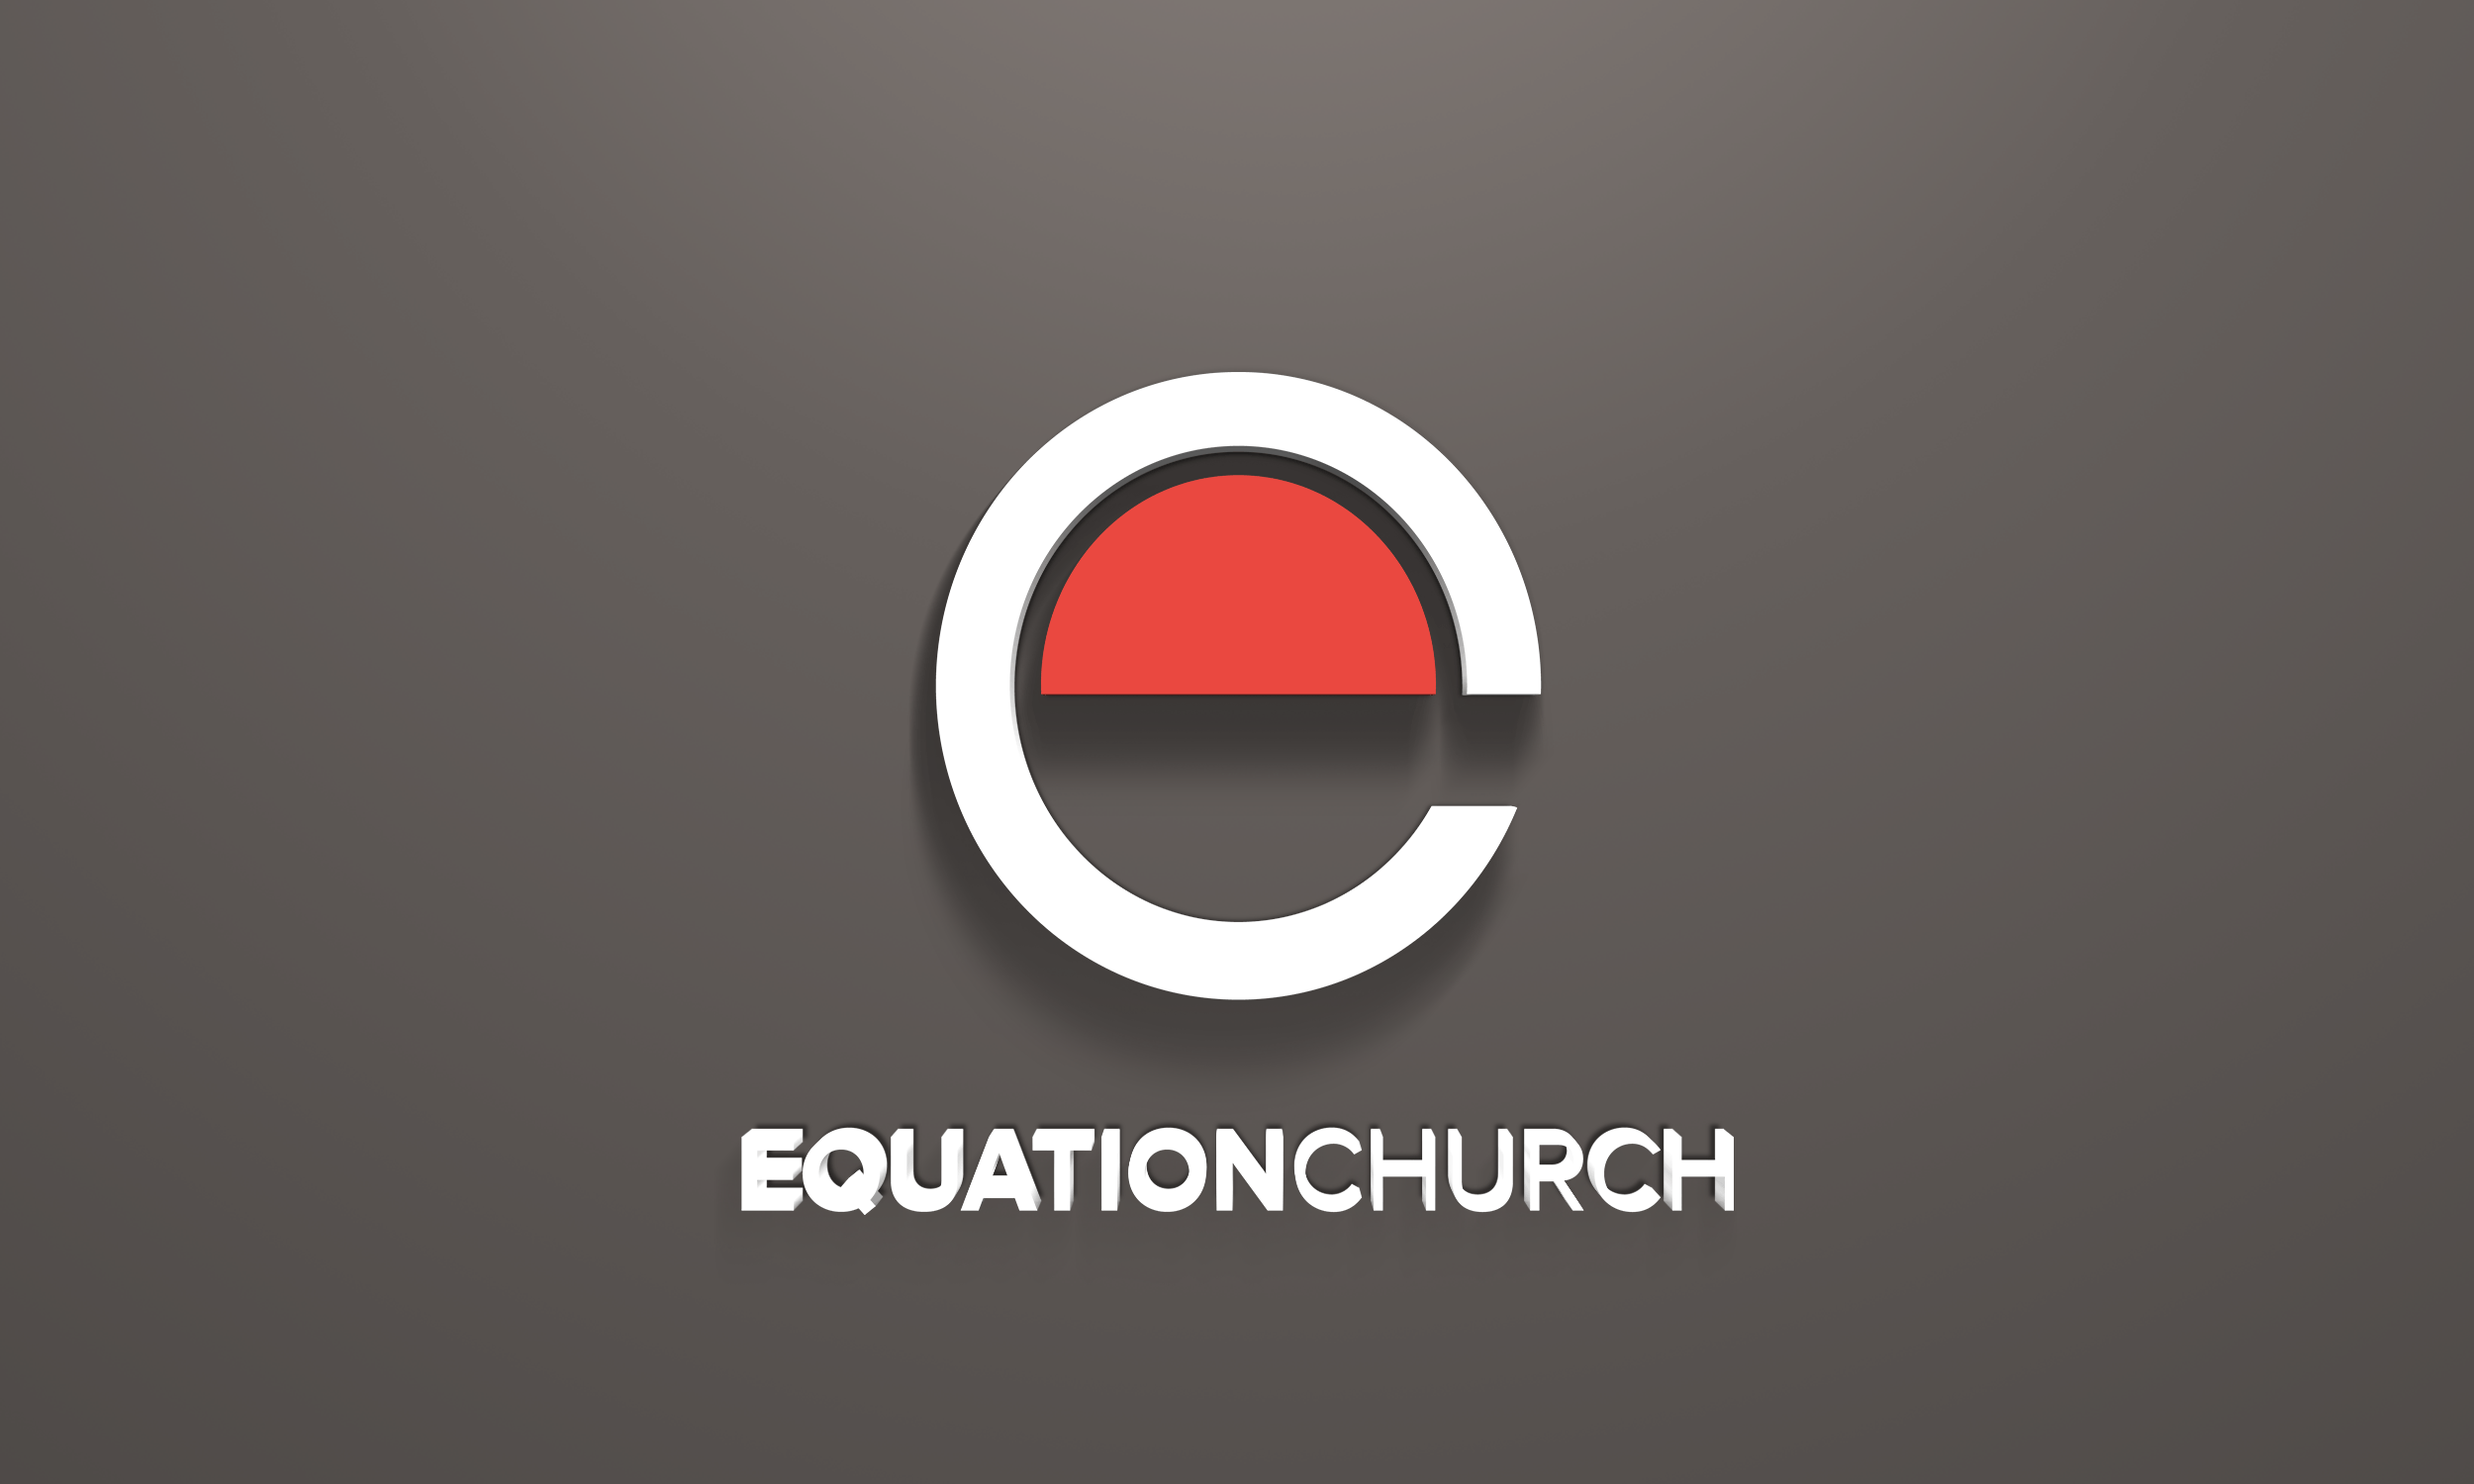 Circle Church Logo - Why The Change of Logo?